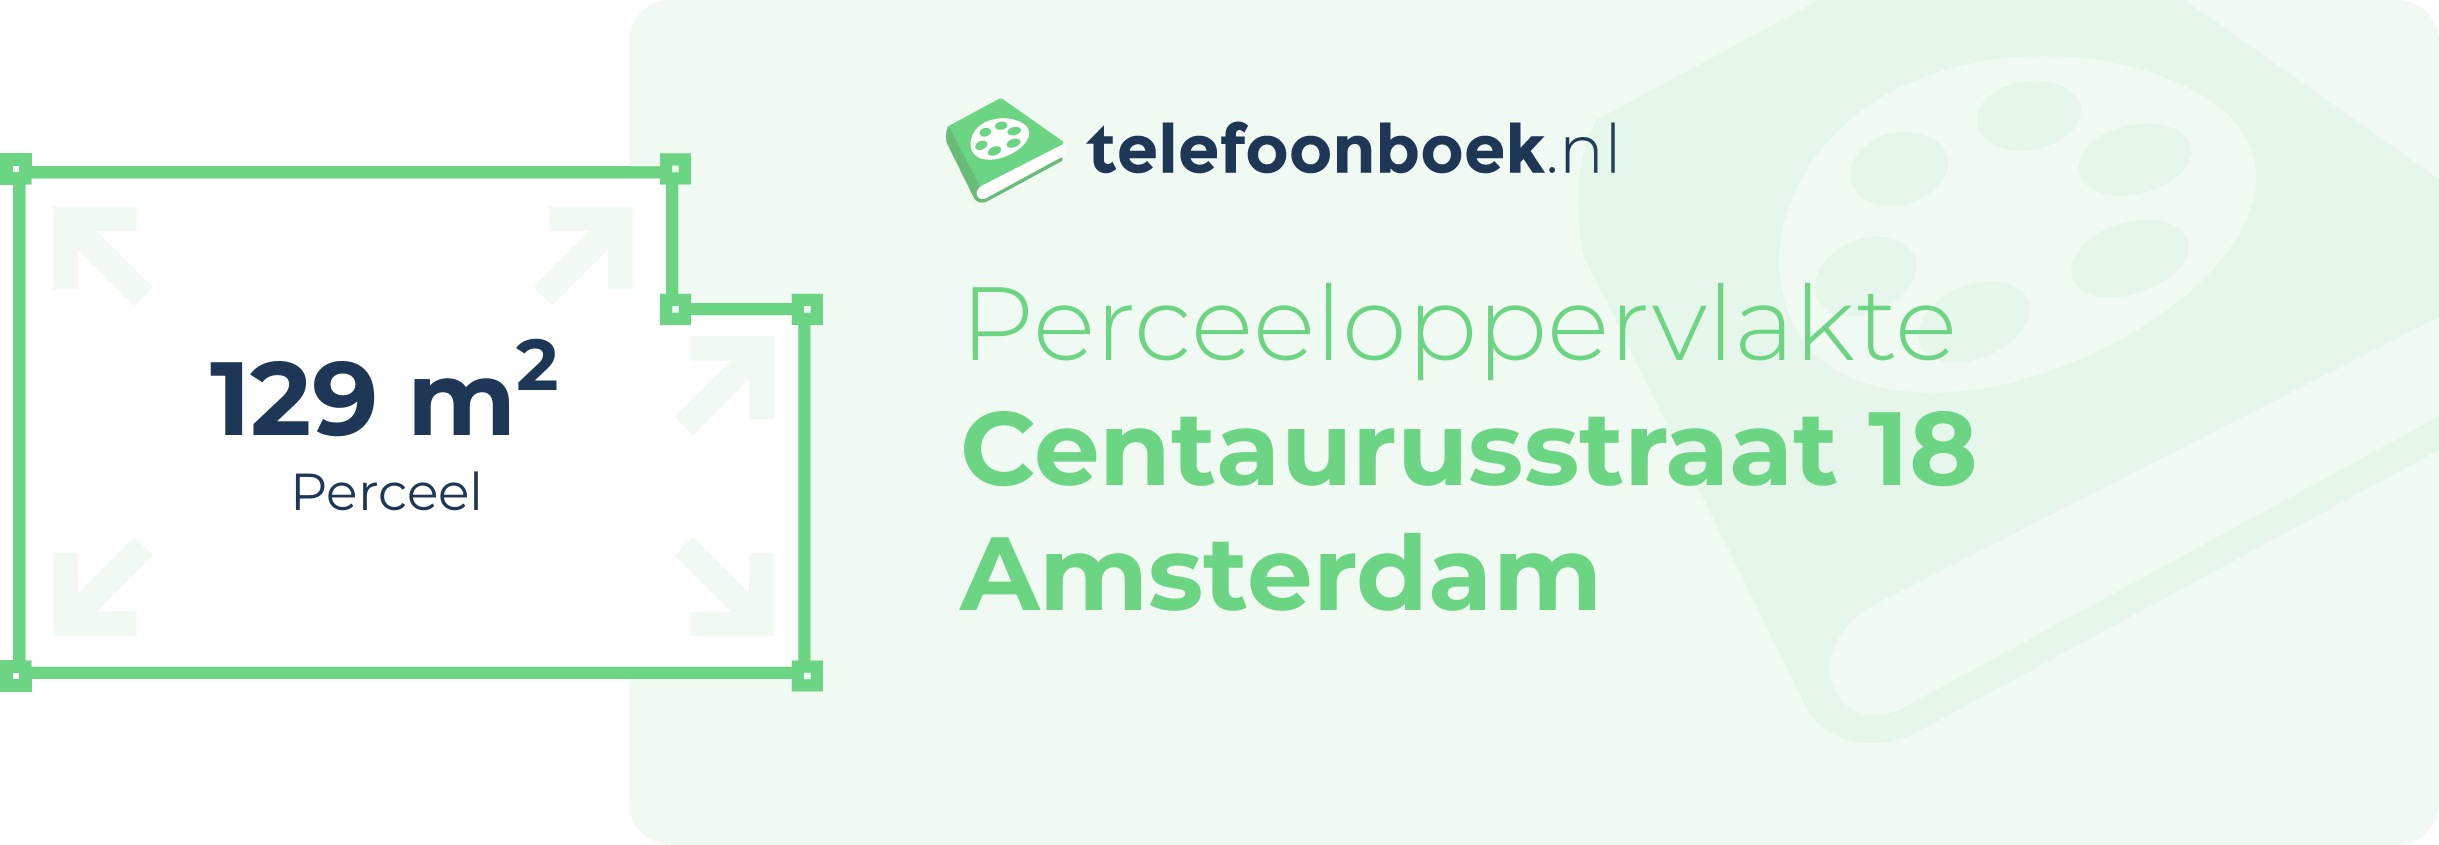 Perceeloppervlakte Centaurusstraat 18 Amsterdam